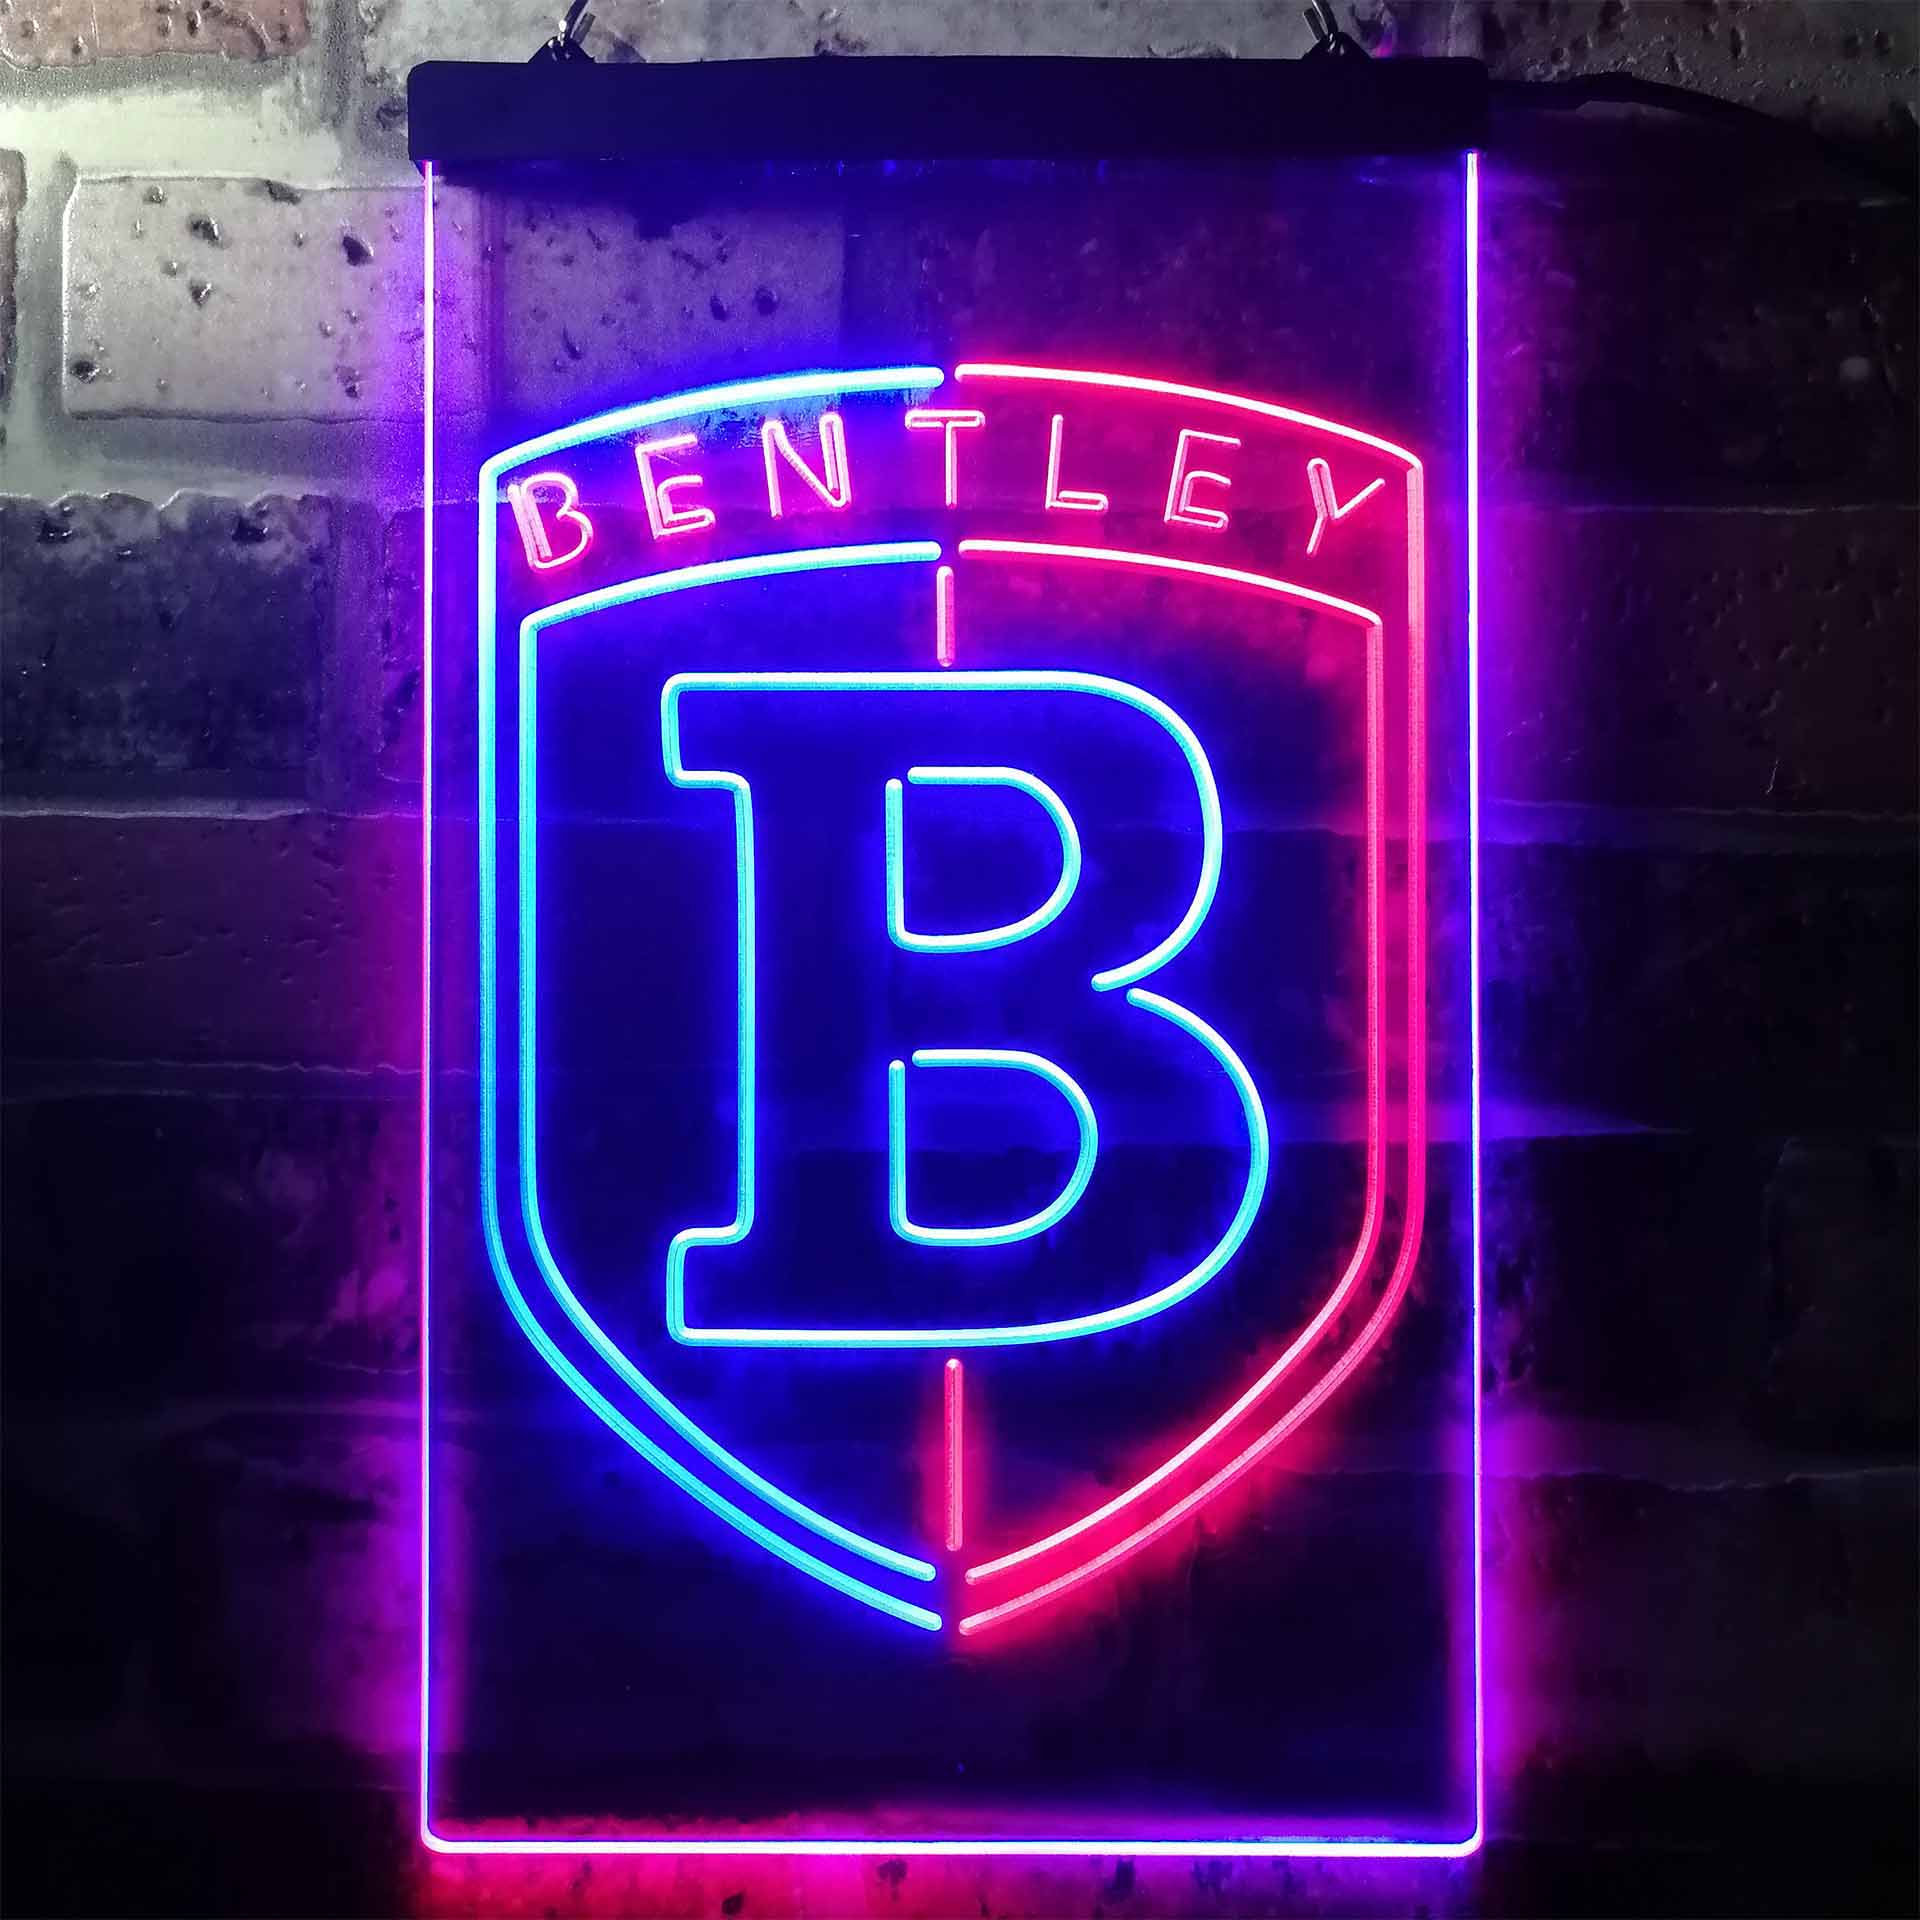 Bentley Car Neon-Like LED Sign - ProLedSign